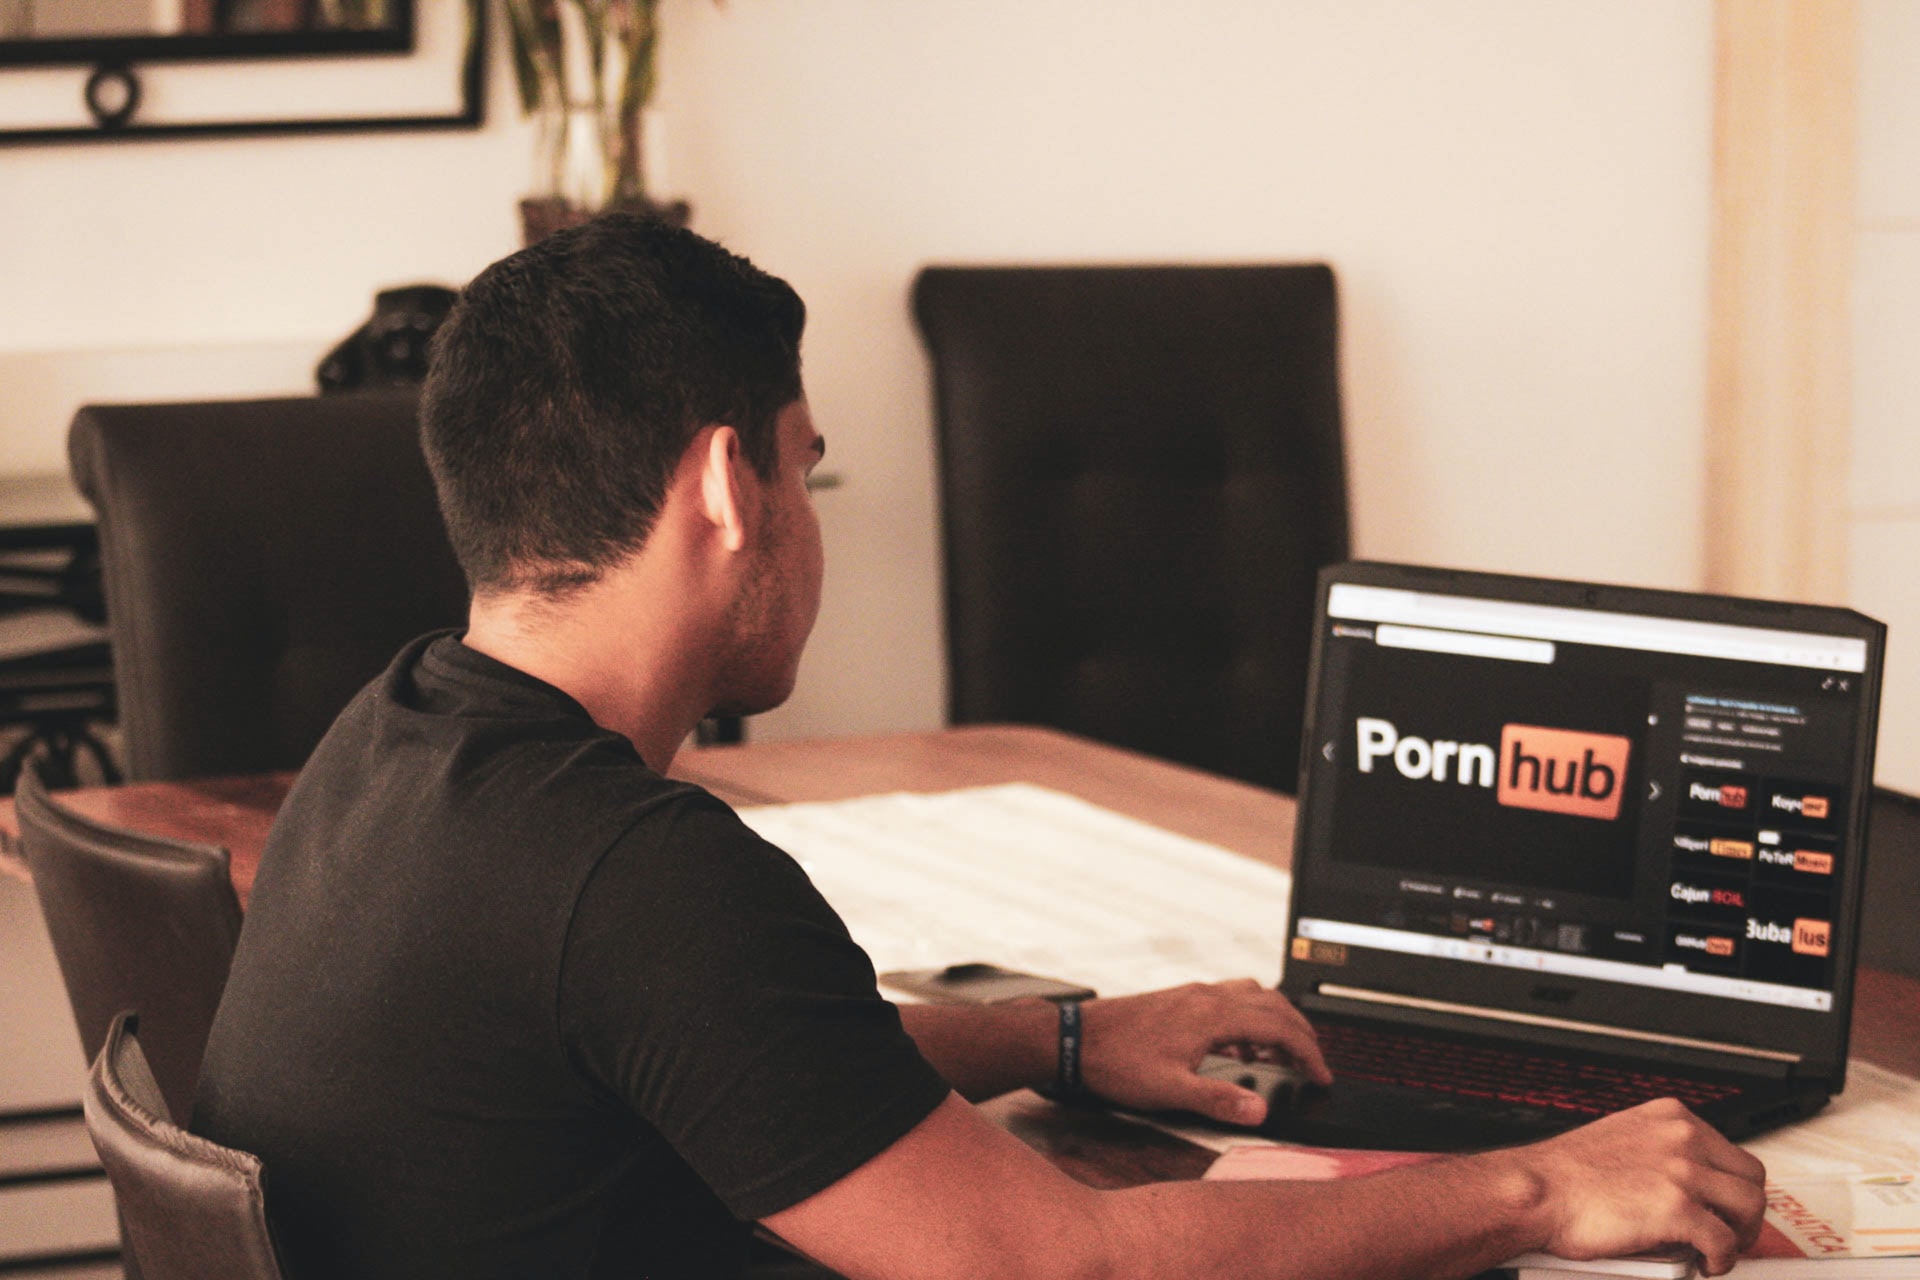 A man in black shirt is watching pornhub website on laptop